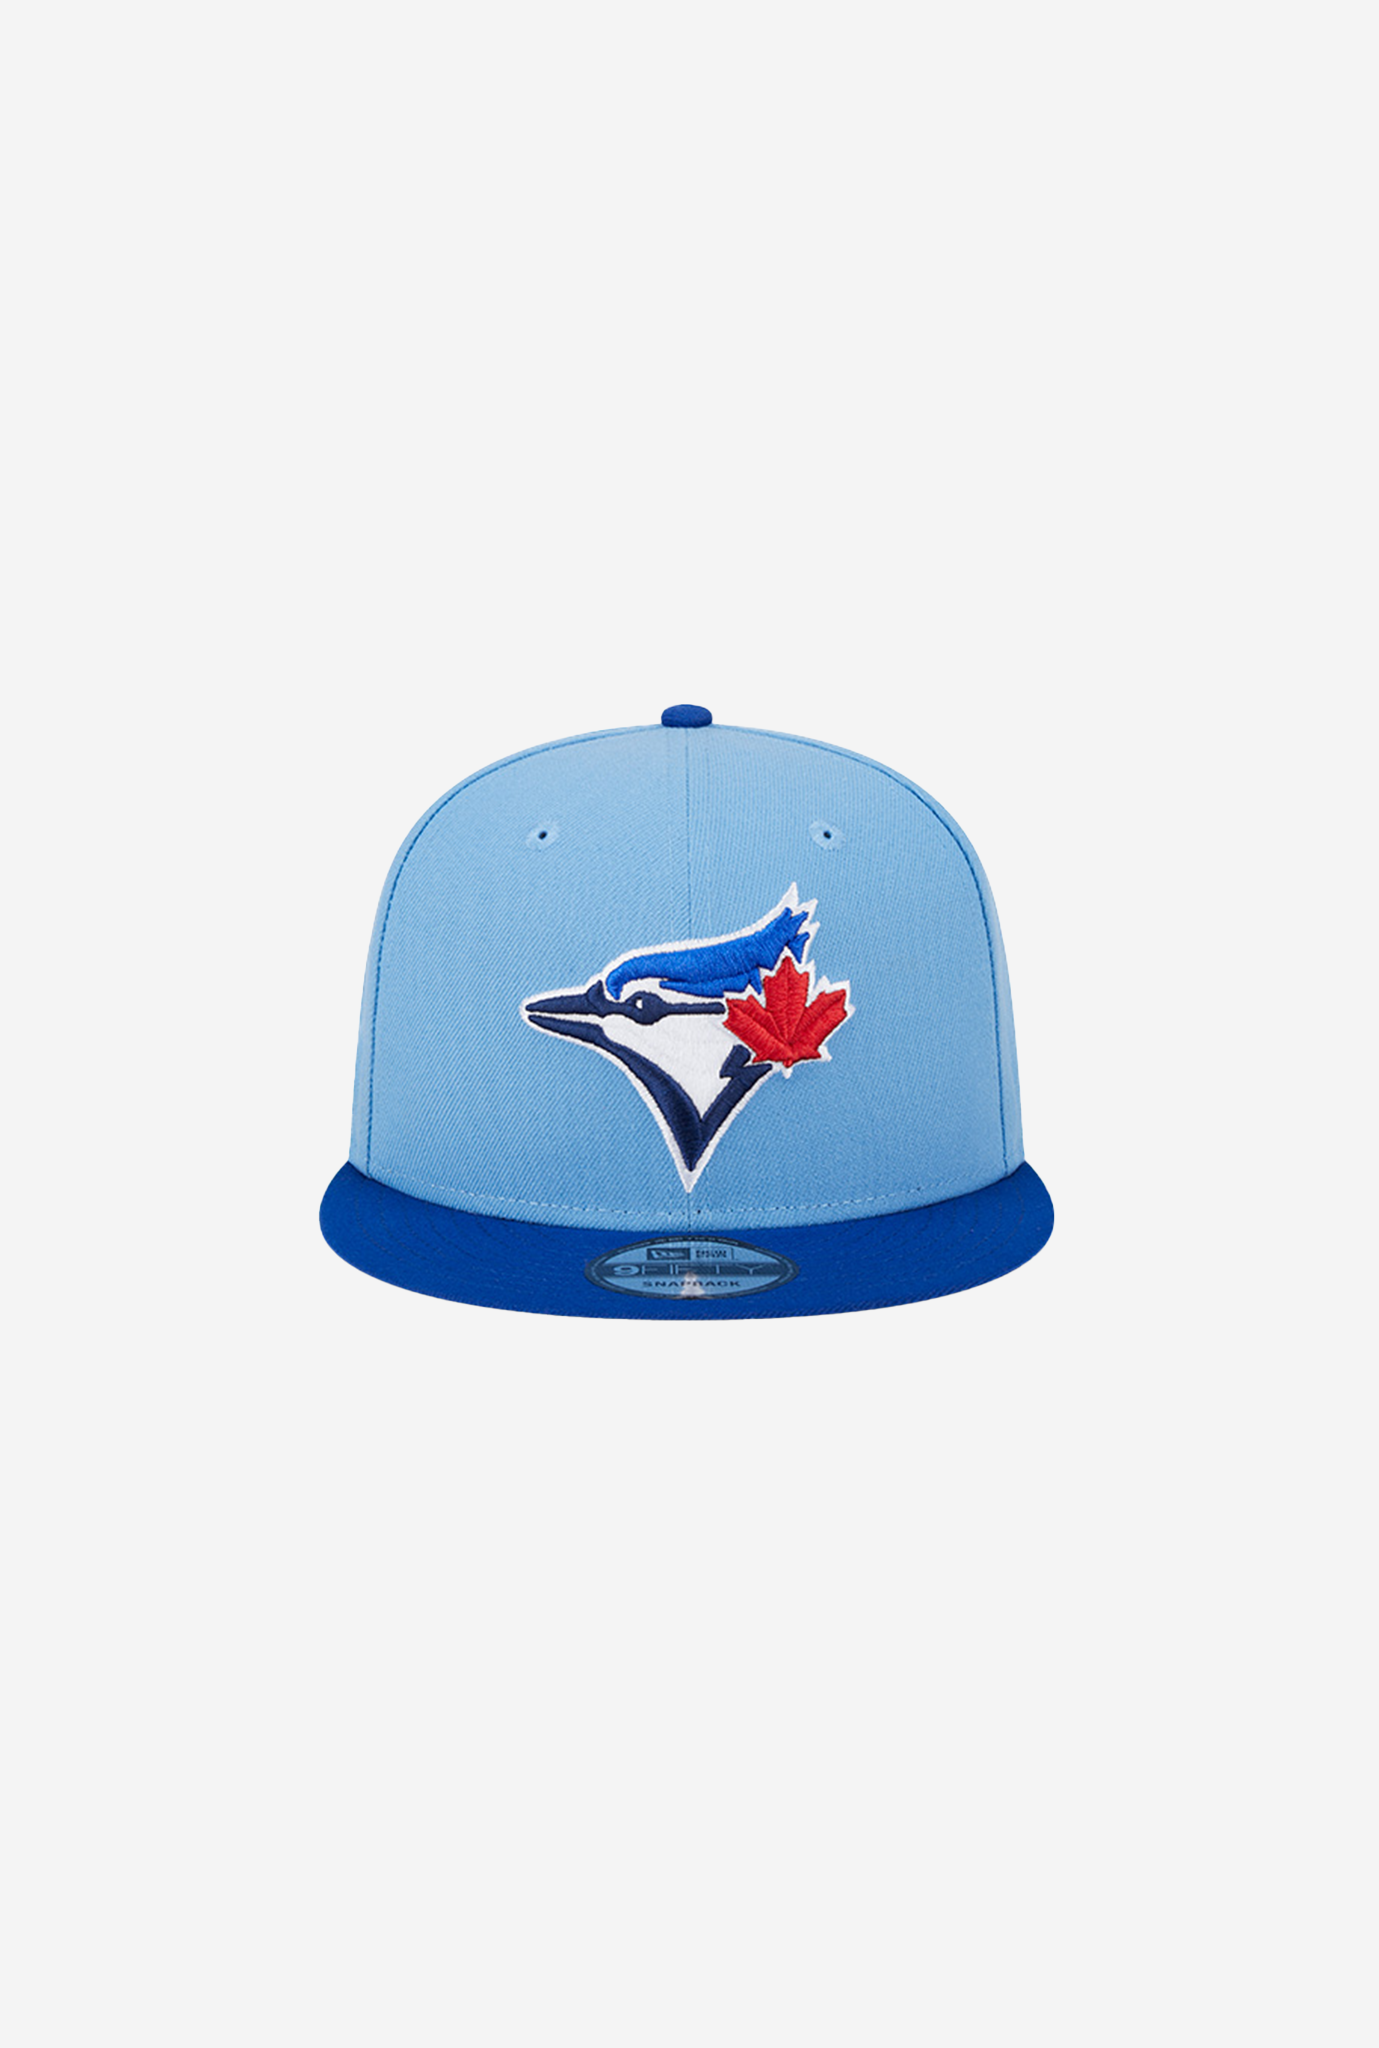 Toronto Blue Jays Spring Training 9FIFTY Hat